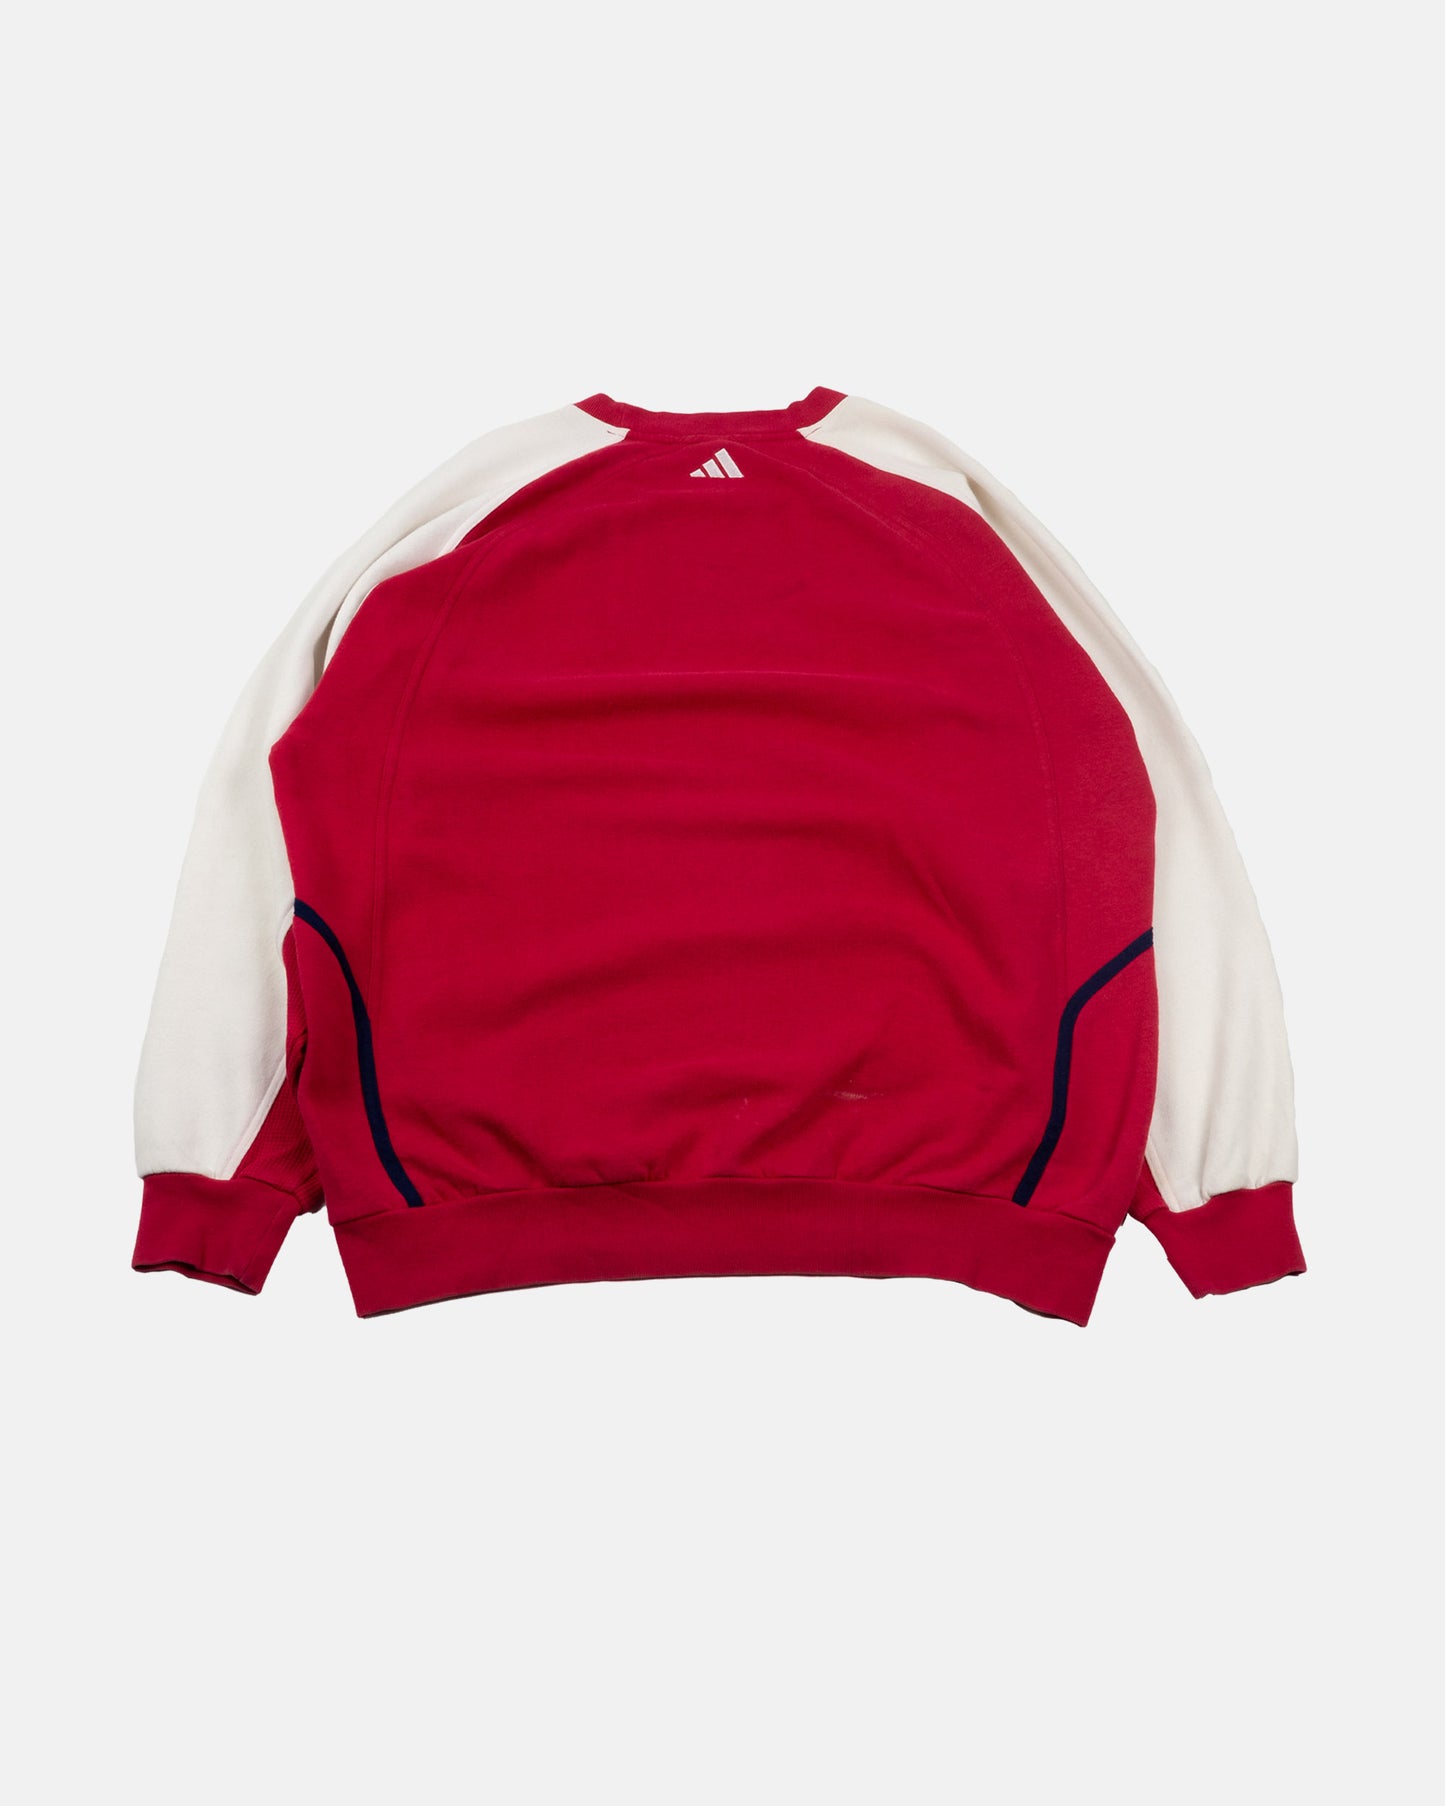 Adidas Bayern Munich Red/White Sweatshirt